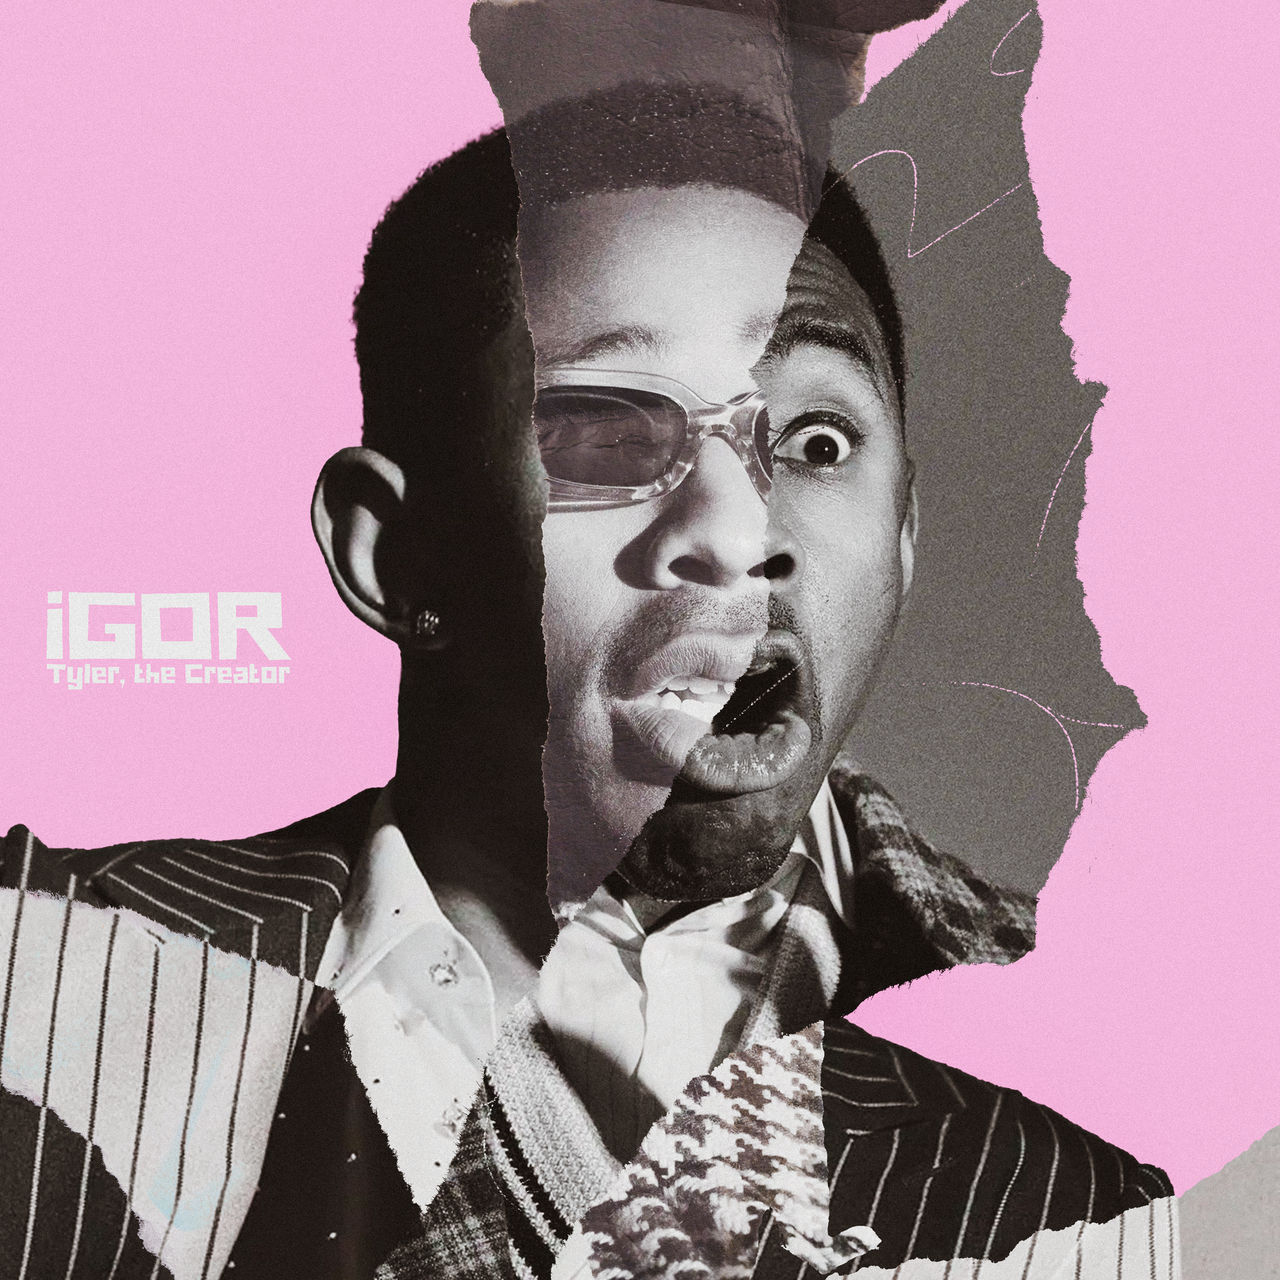 IGOR - Tyler, The Creator Concept Album Artwork by StuartEngelhart